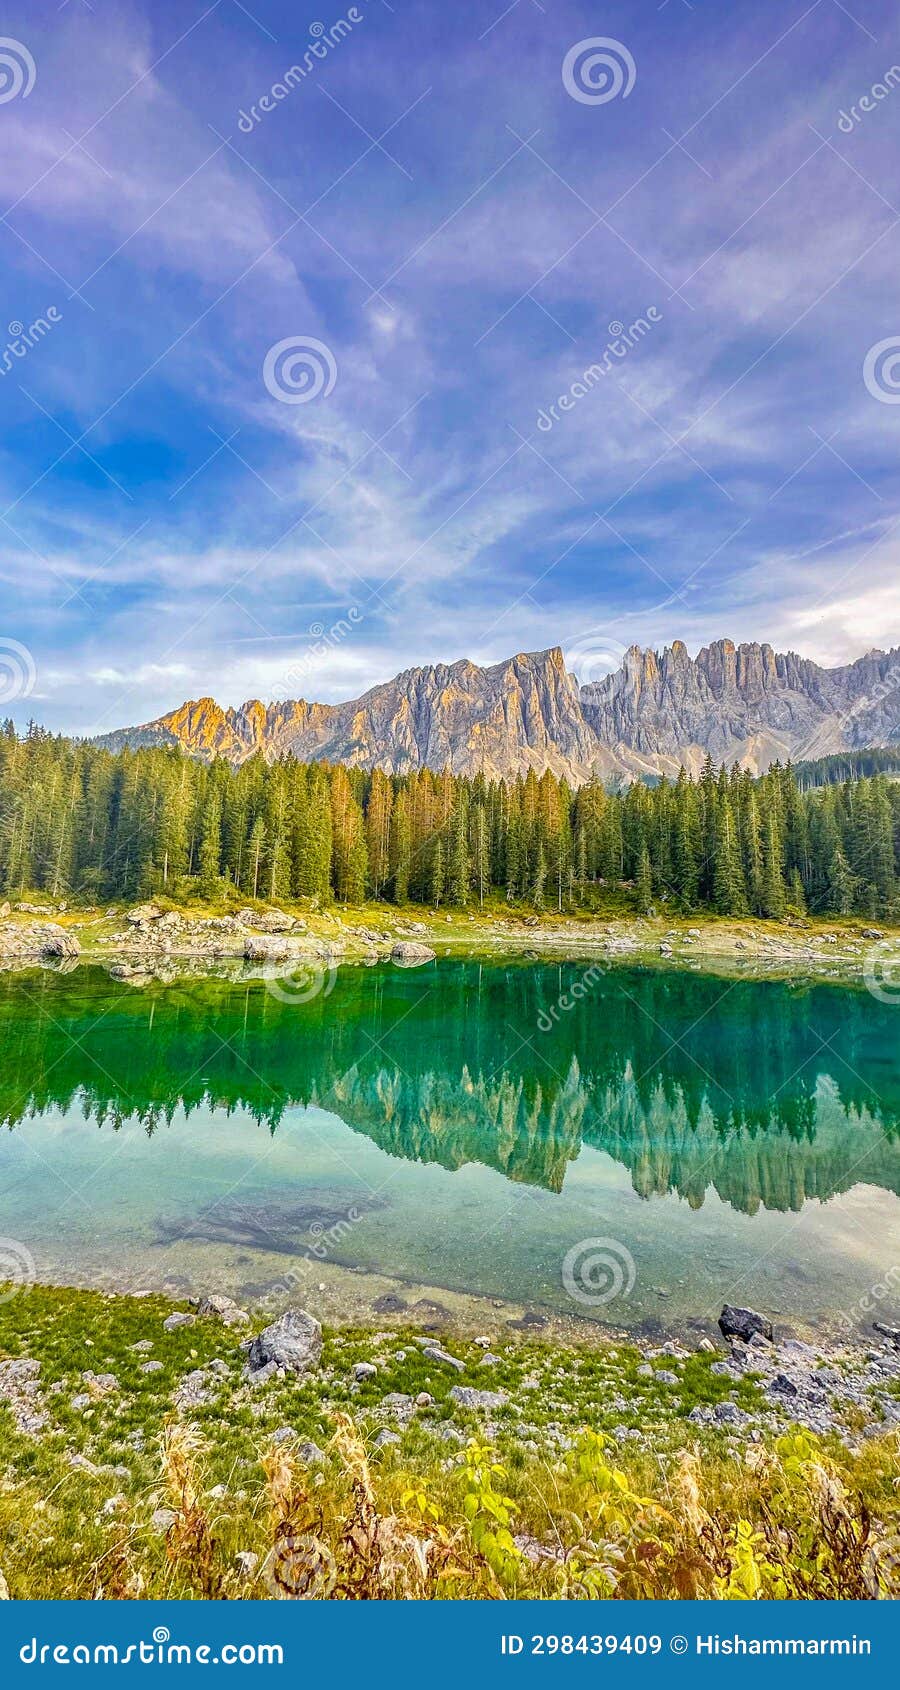 lago di carezza,elevation 1,519m, an alpine masterpiece with emerald waters